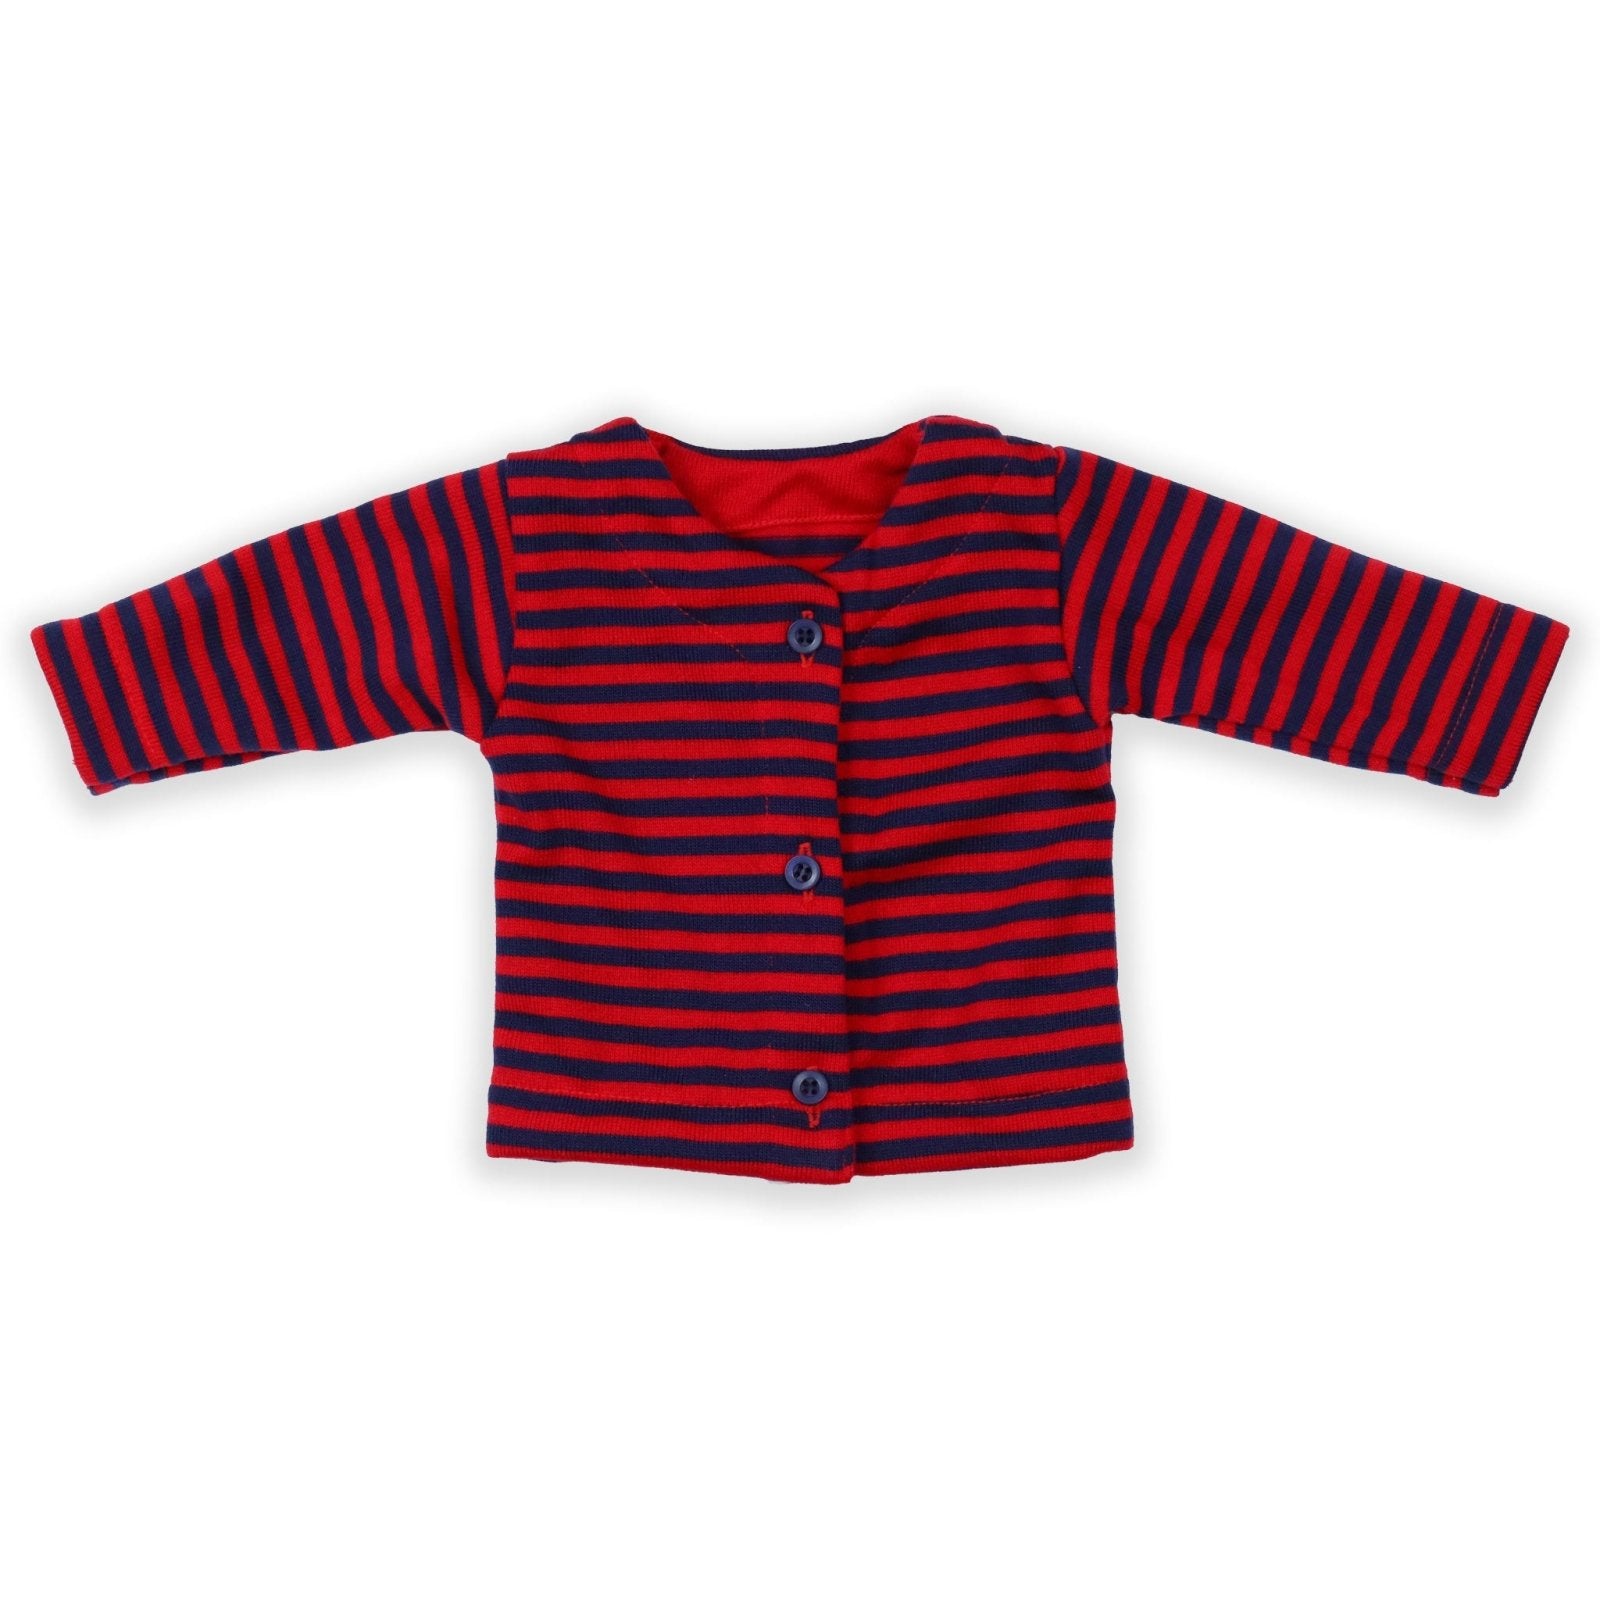 4 Pcs Woolen Gift Set Black & Red Stripes by Little Darling